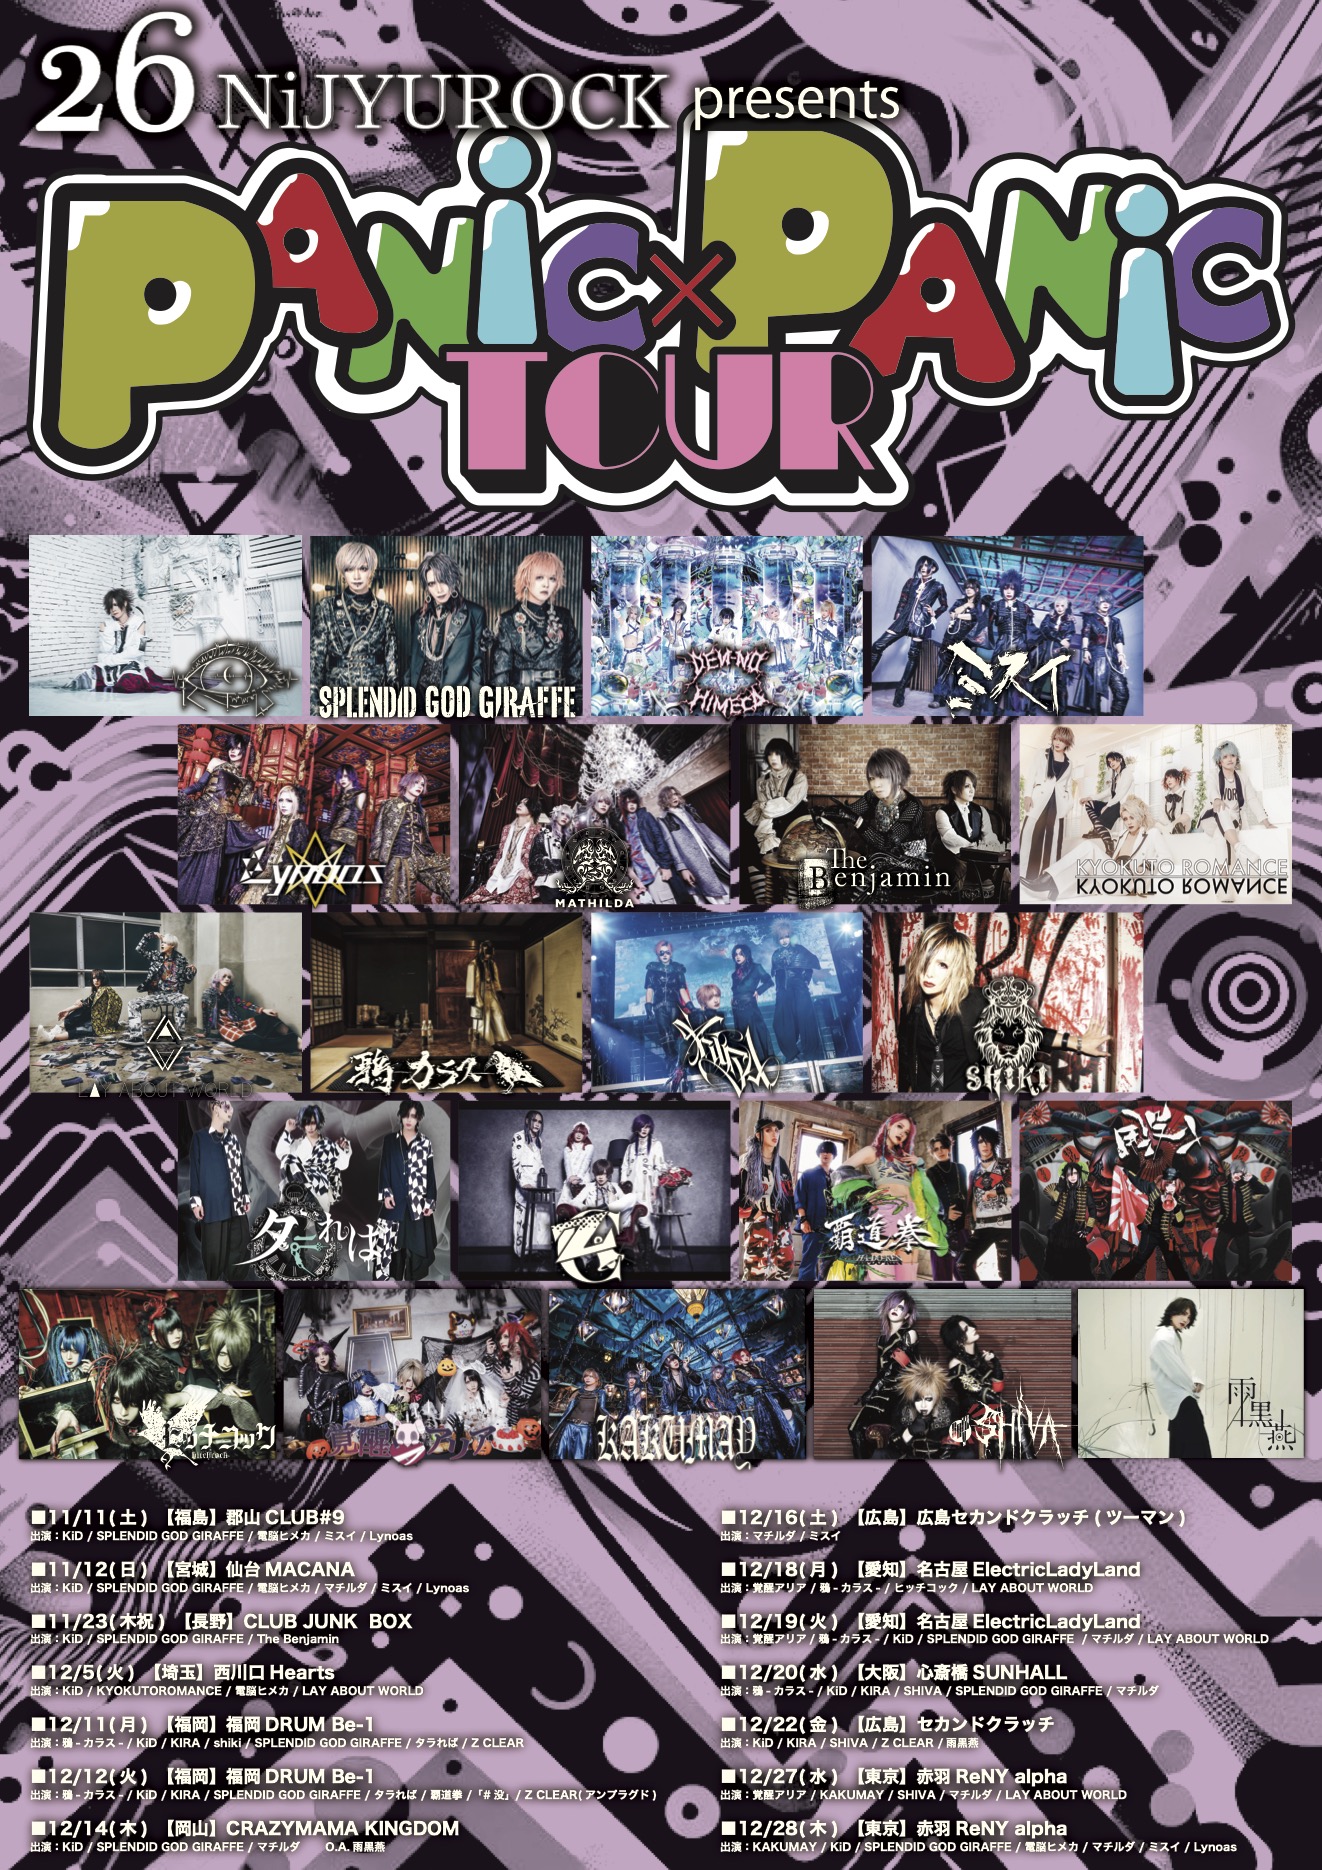 【赤羽12/28】26 NiJYUROCK presents PANiC×PANiC TOUR